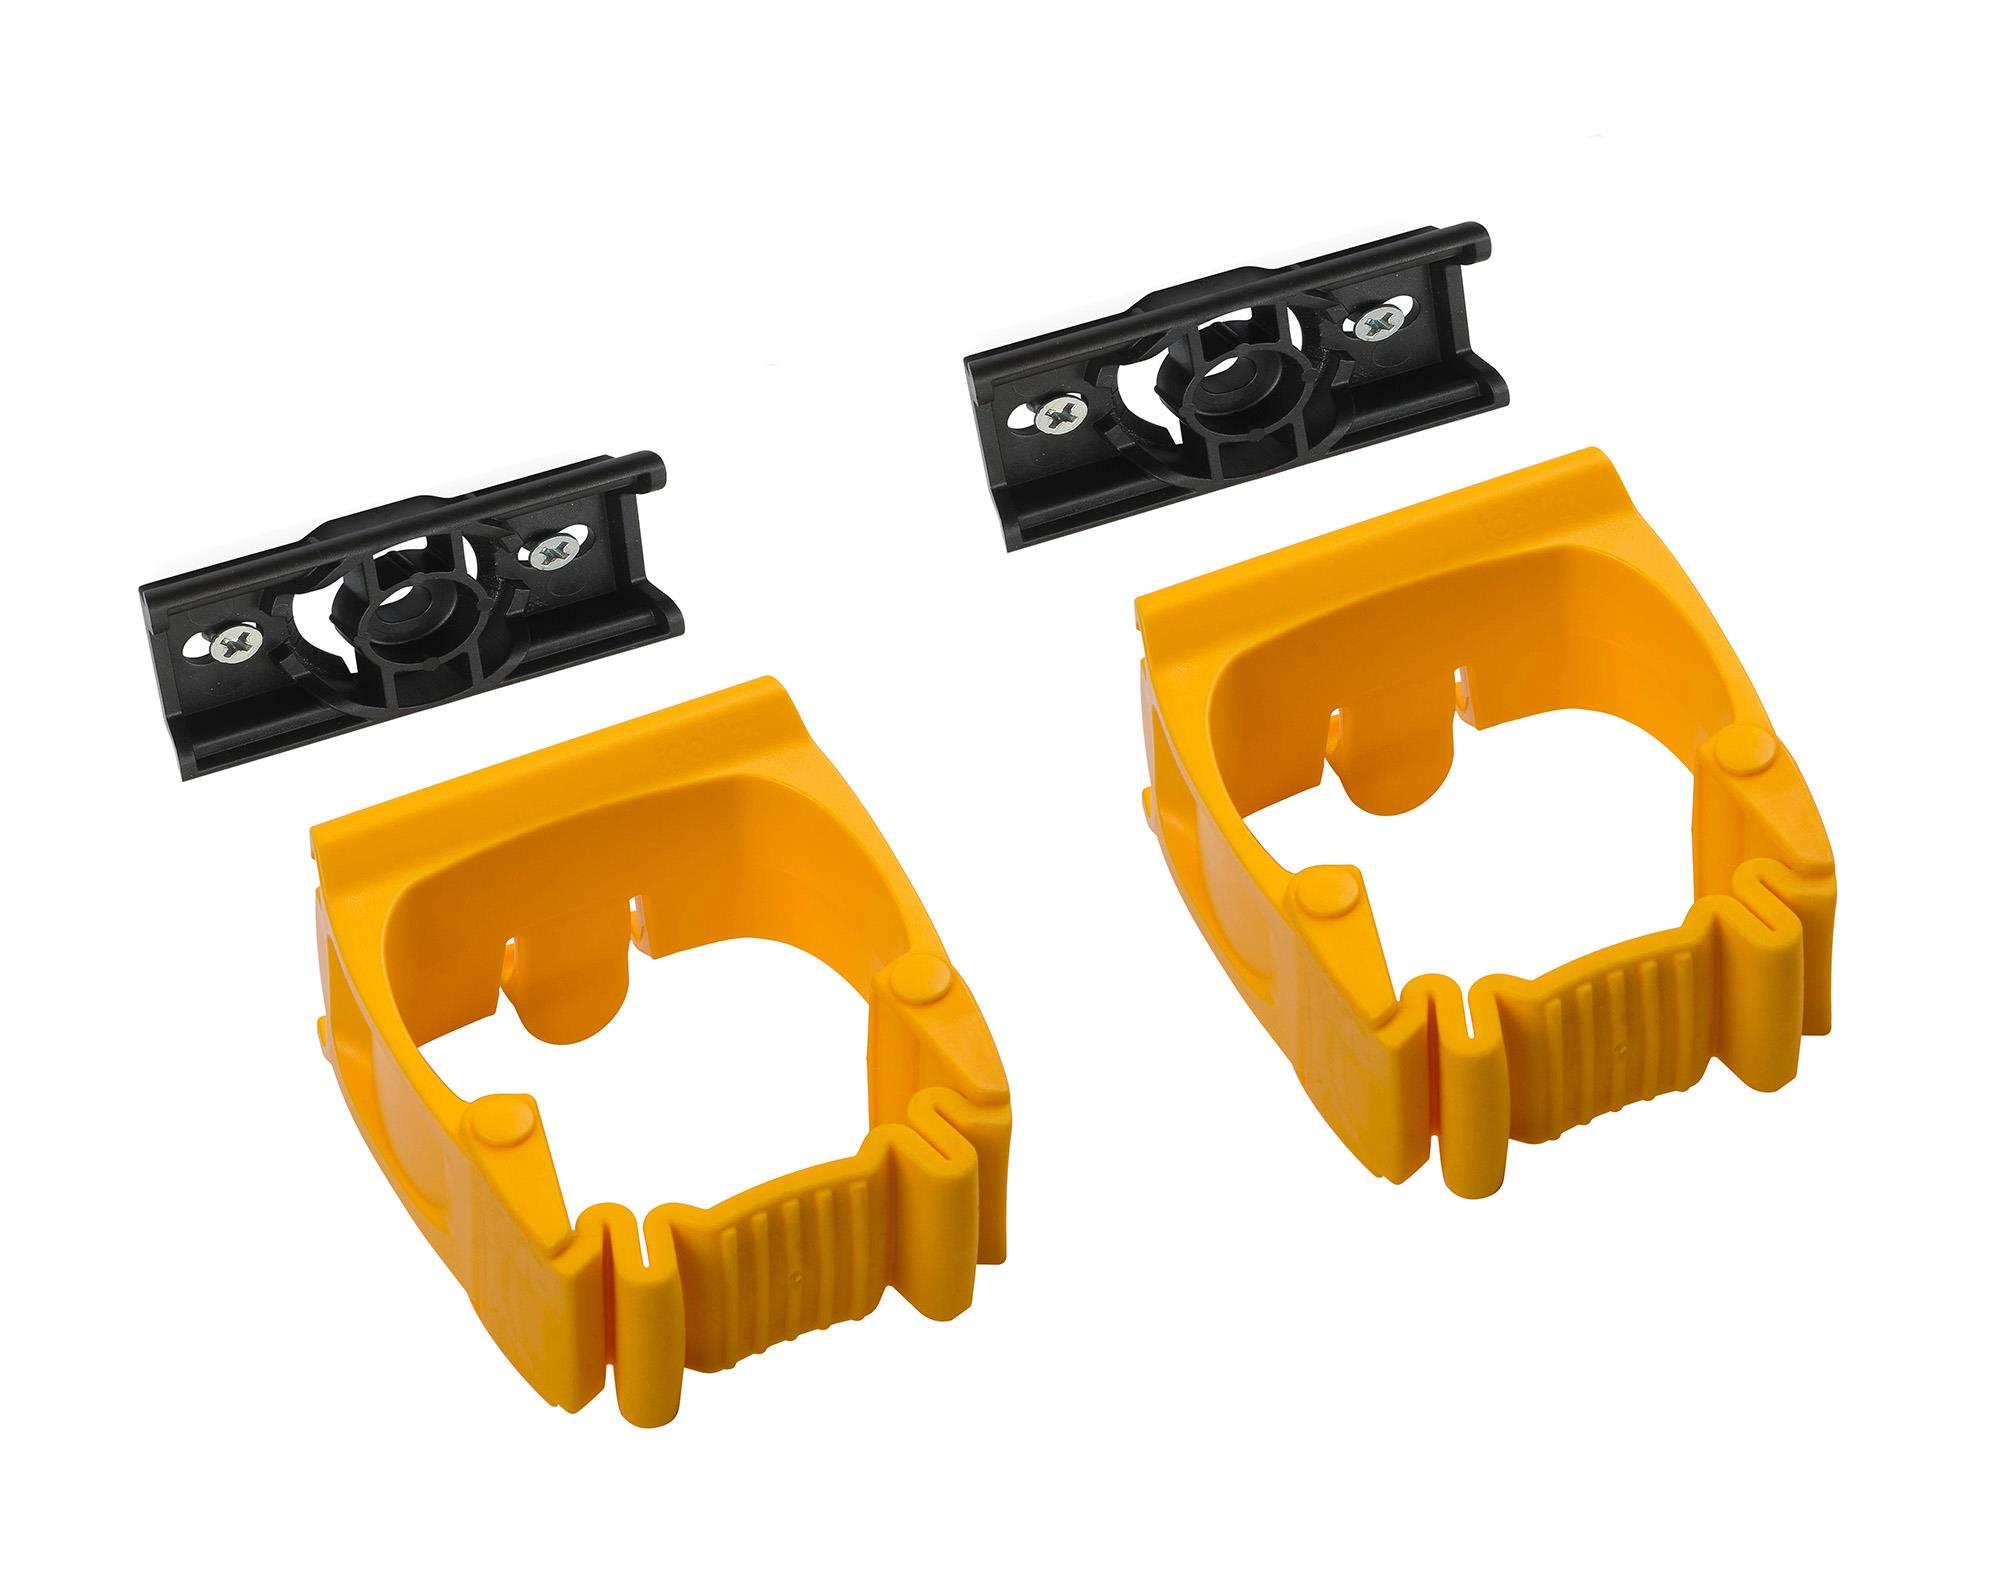 Toolflex One Halter 15-35 mm in gelb im 2er-Pack inkl. Toolflex One Adapter in schwarz